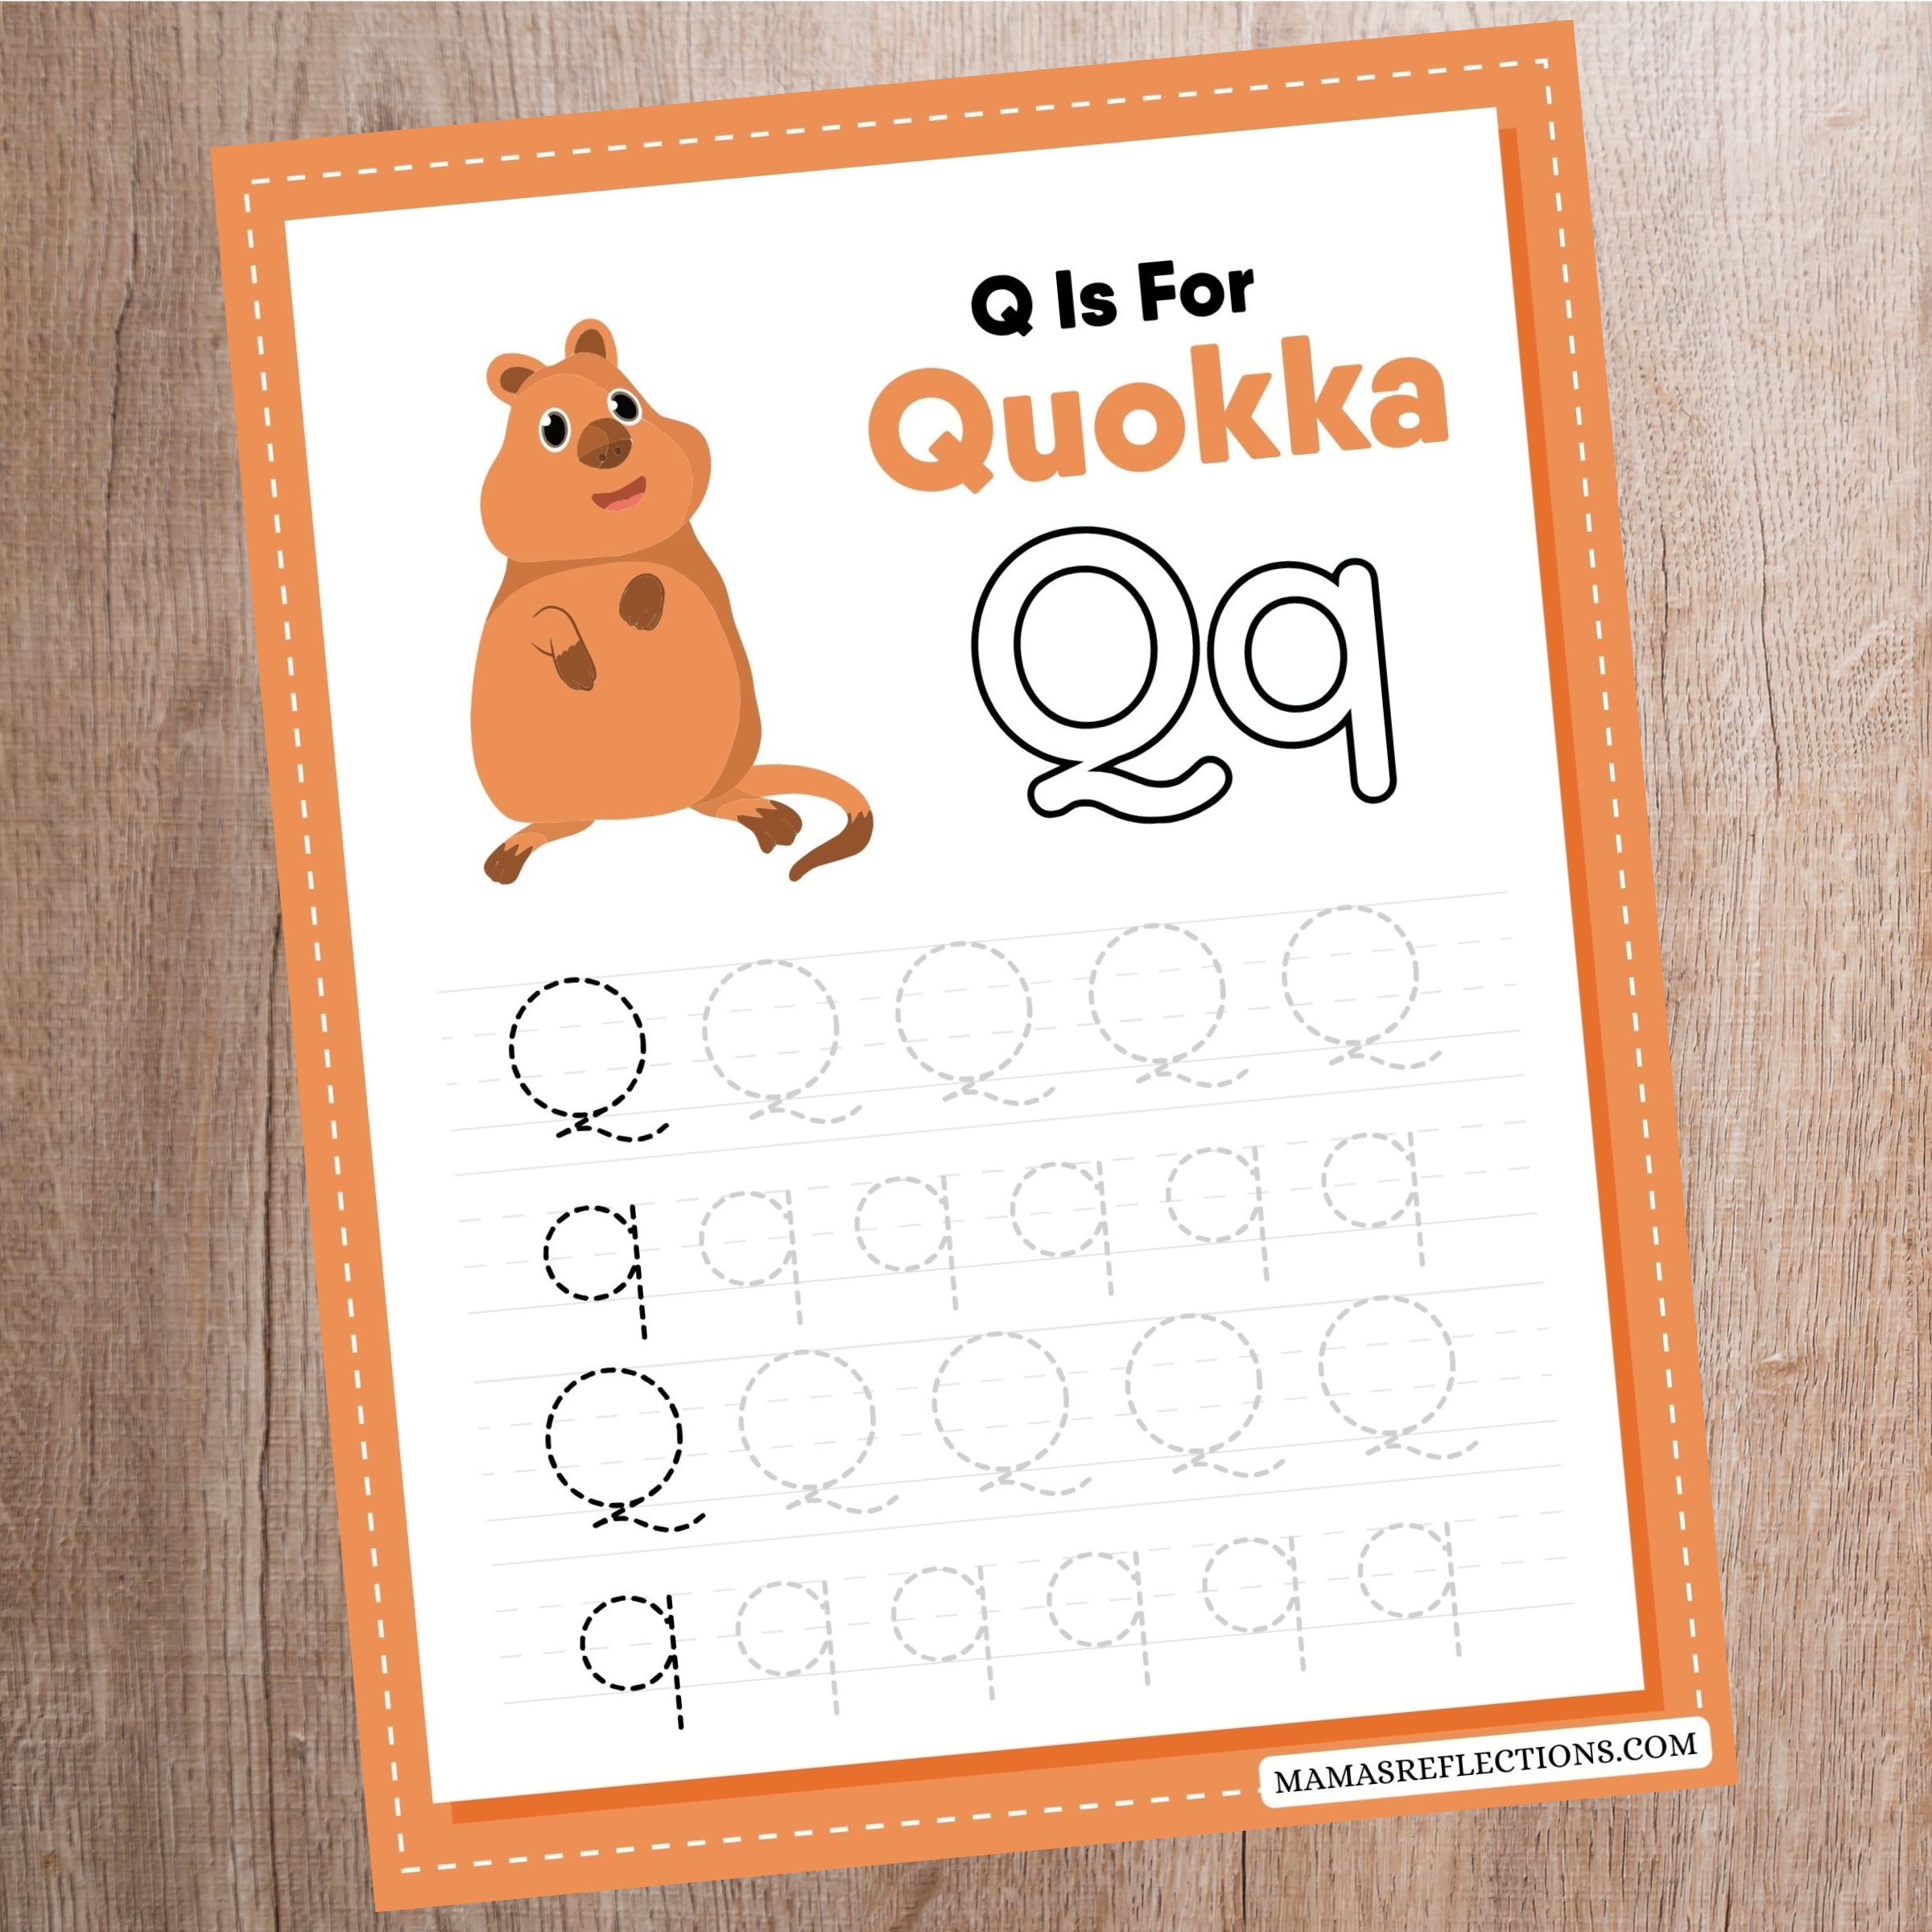 Quokka Letter Q Tracing Worksheet Free Printable